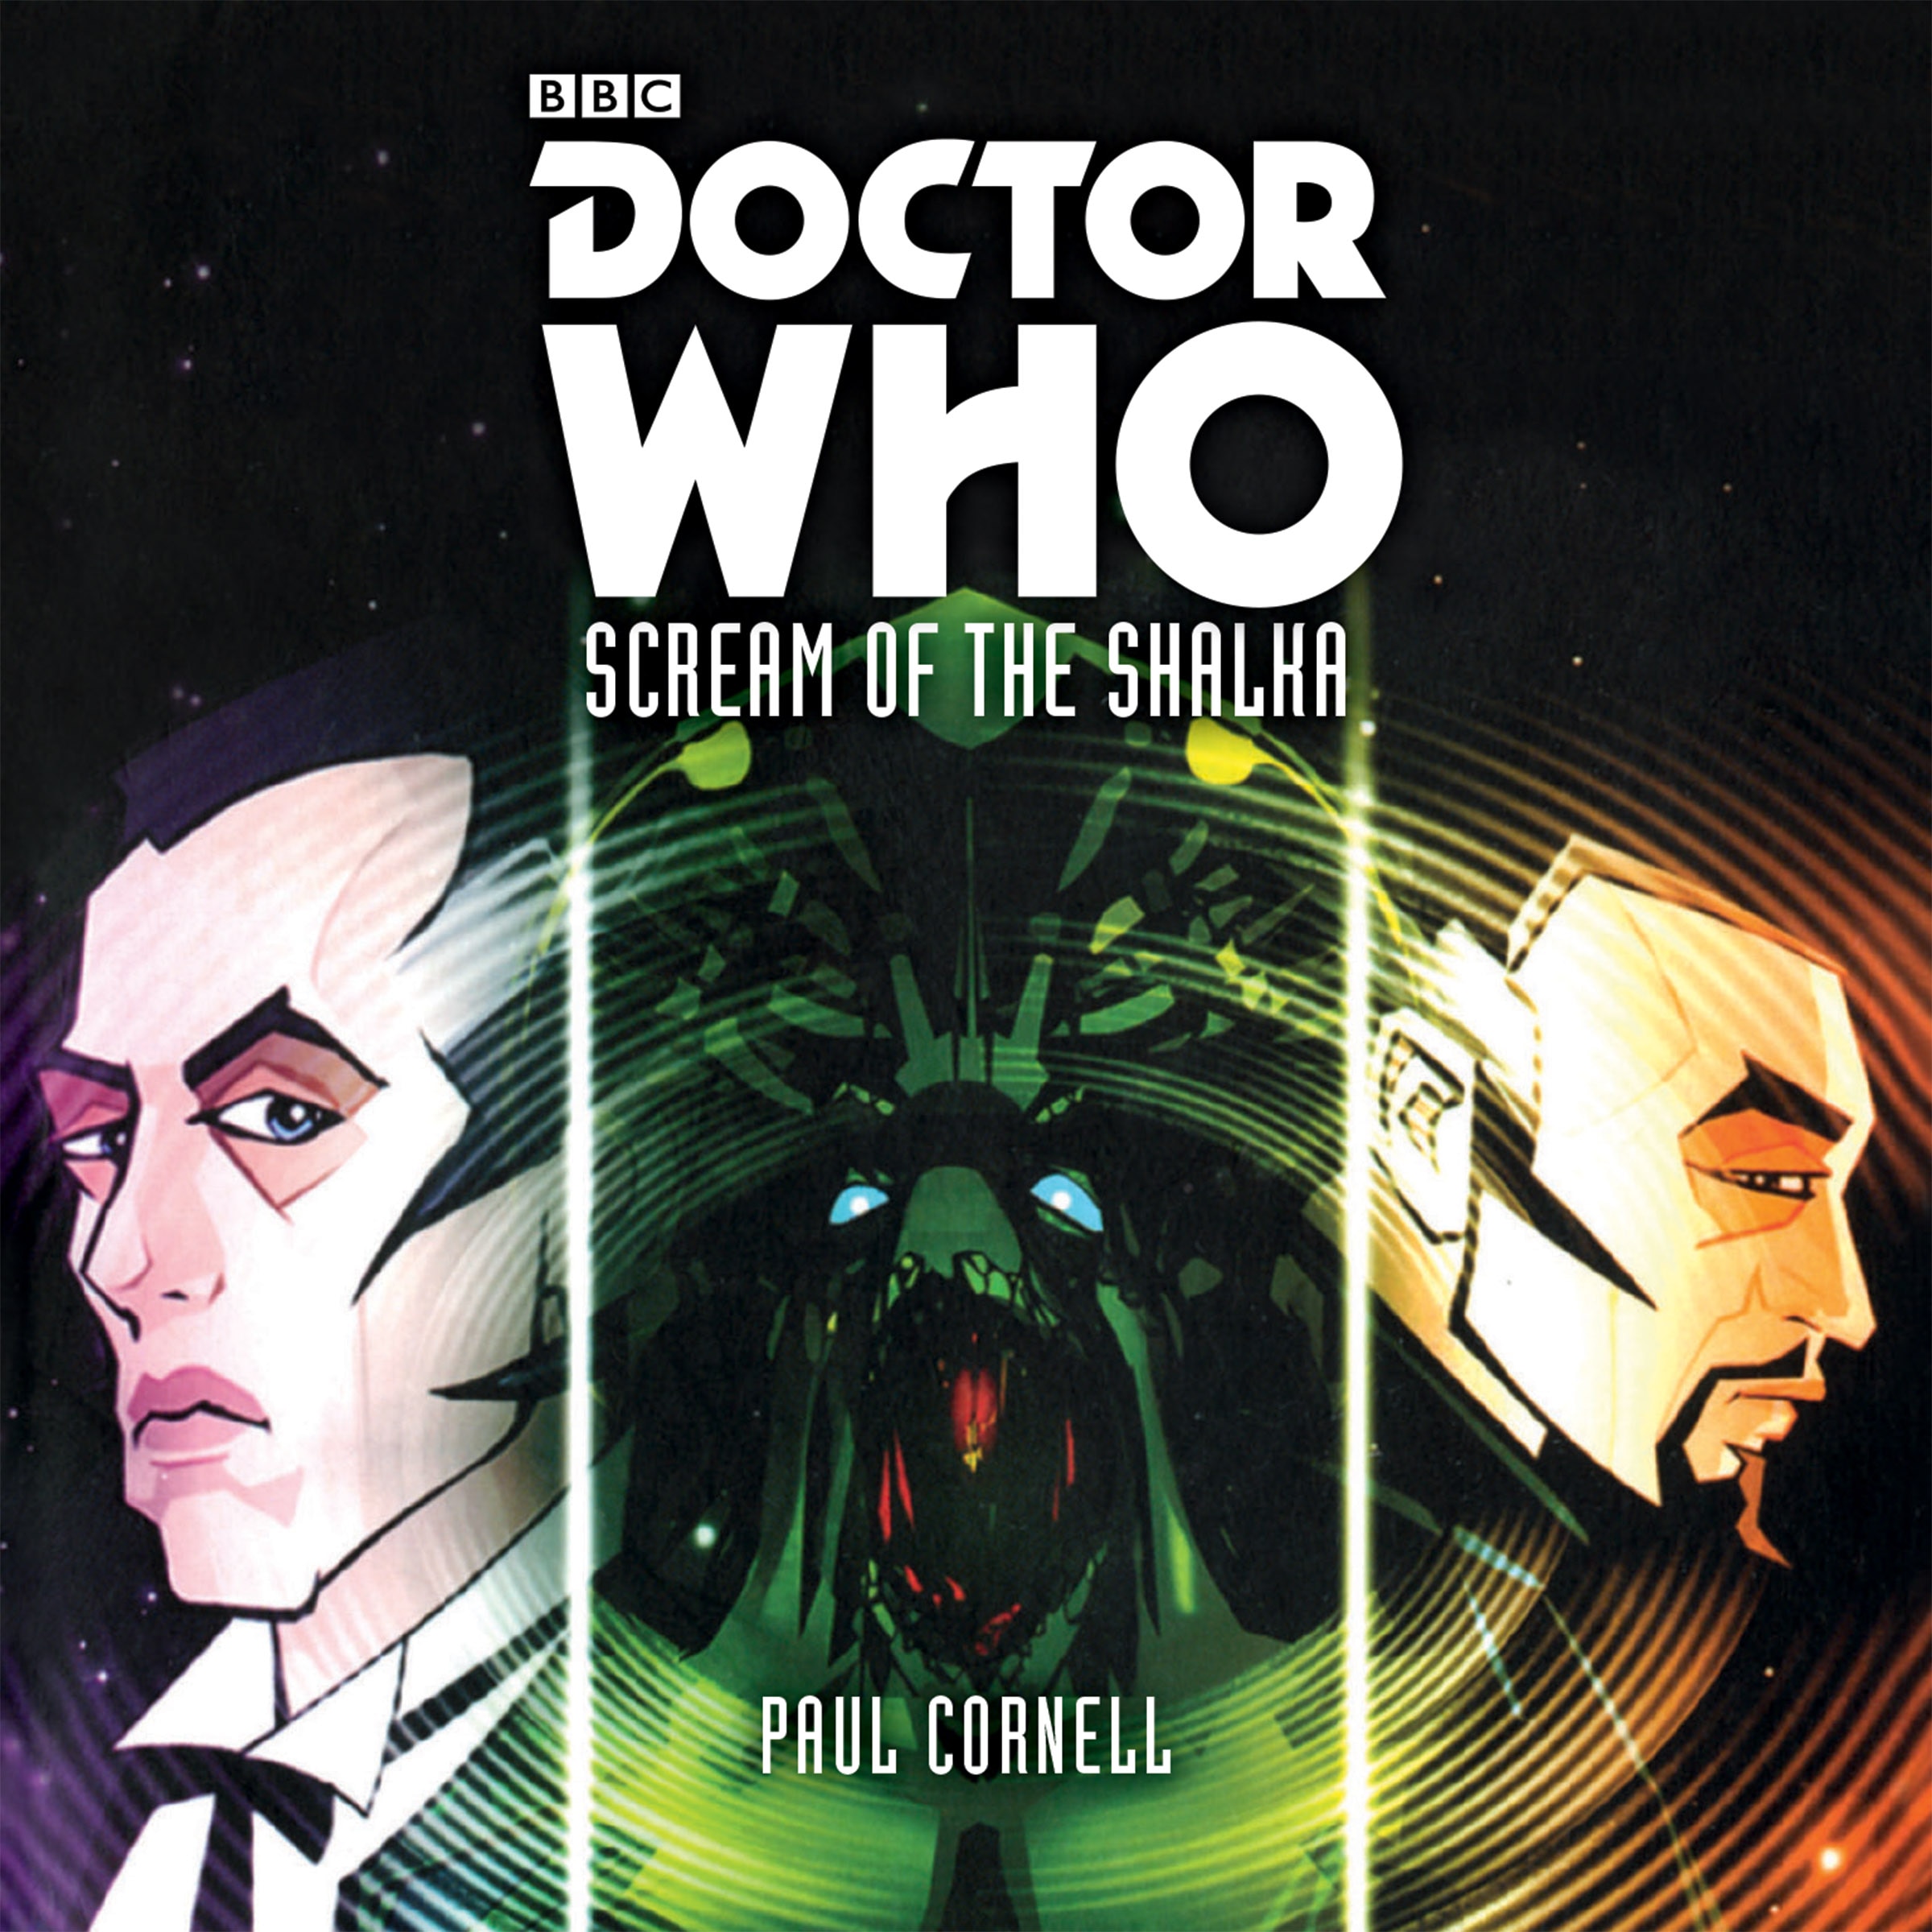 Doctor Who Scream of Shalka cover art